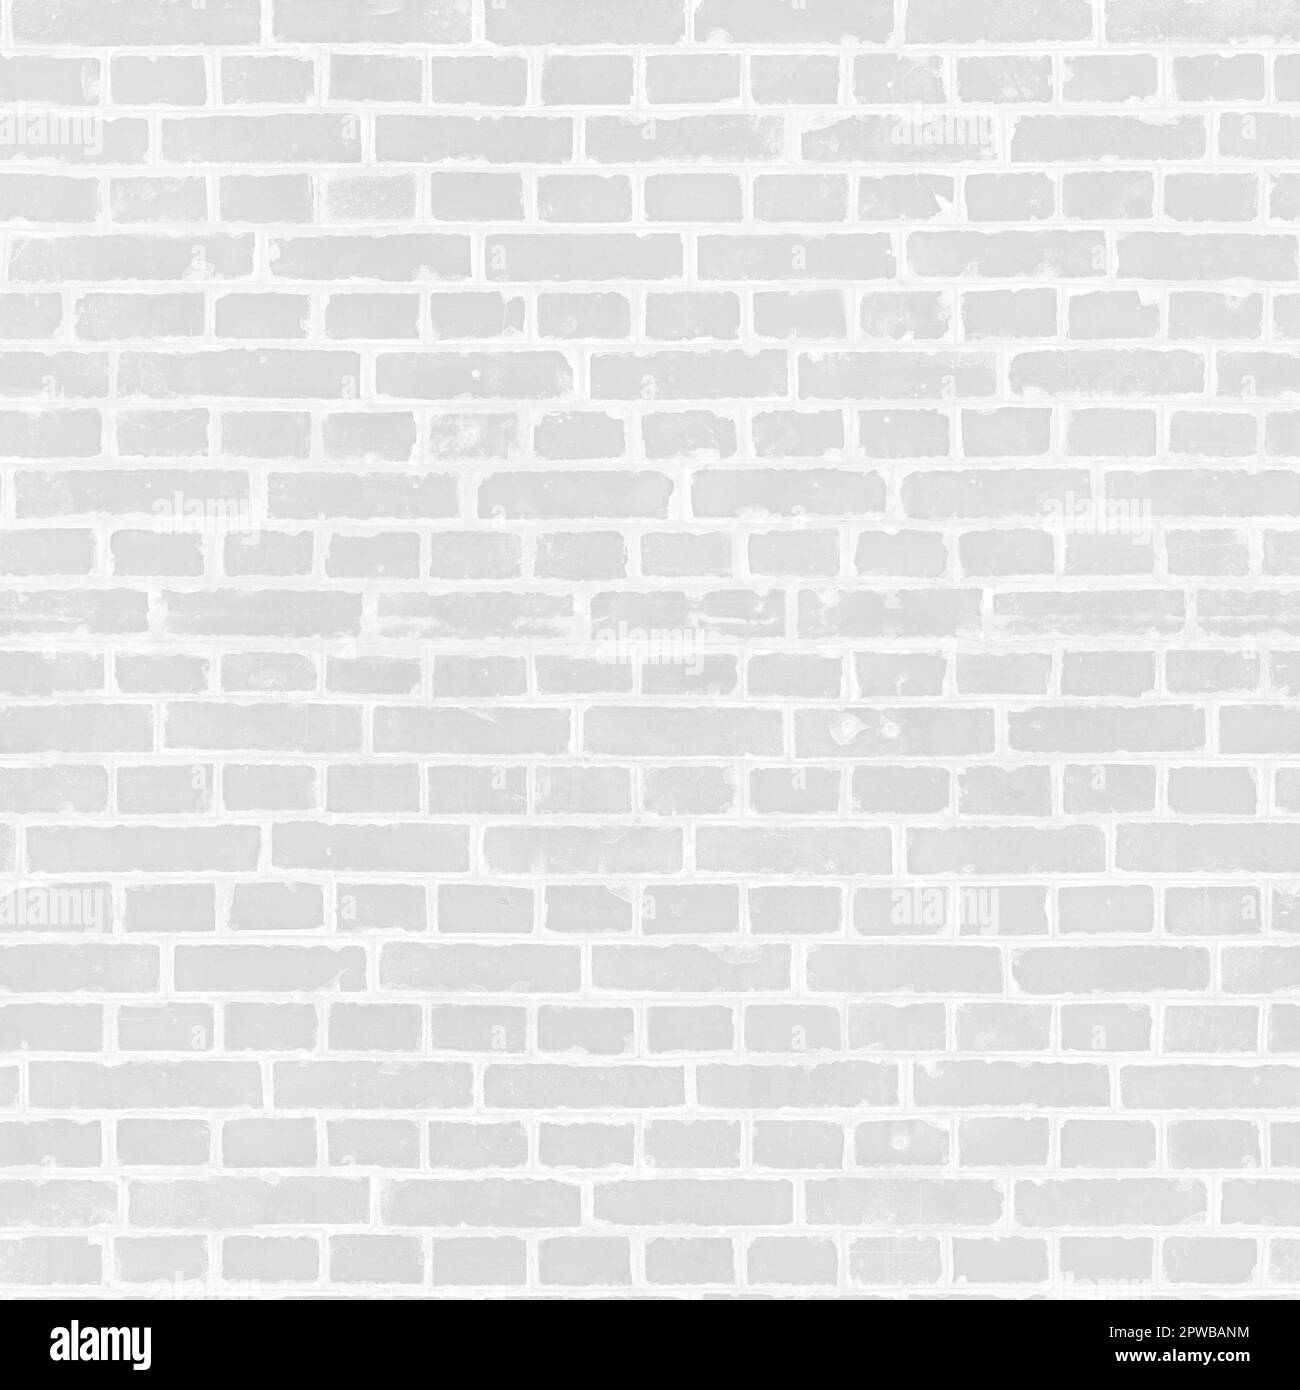 Ambient Occlusion texture brick wall, AO brick wall Stock Photo - Alamy